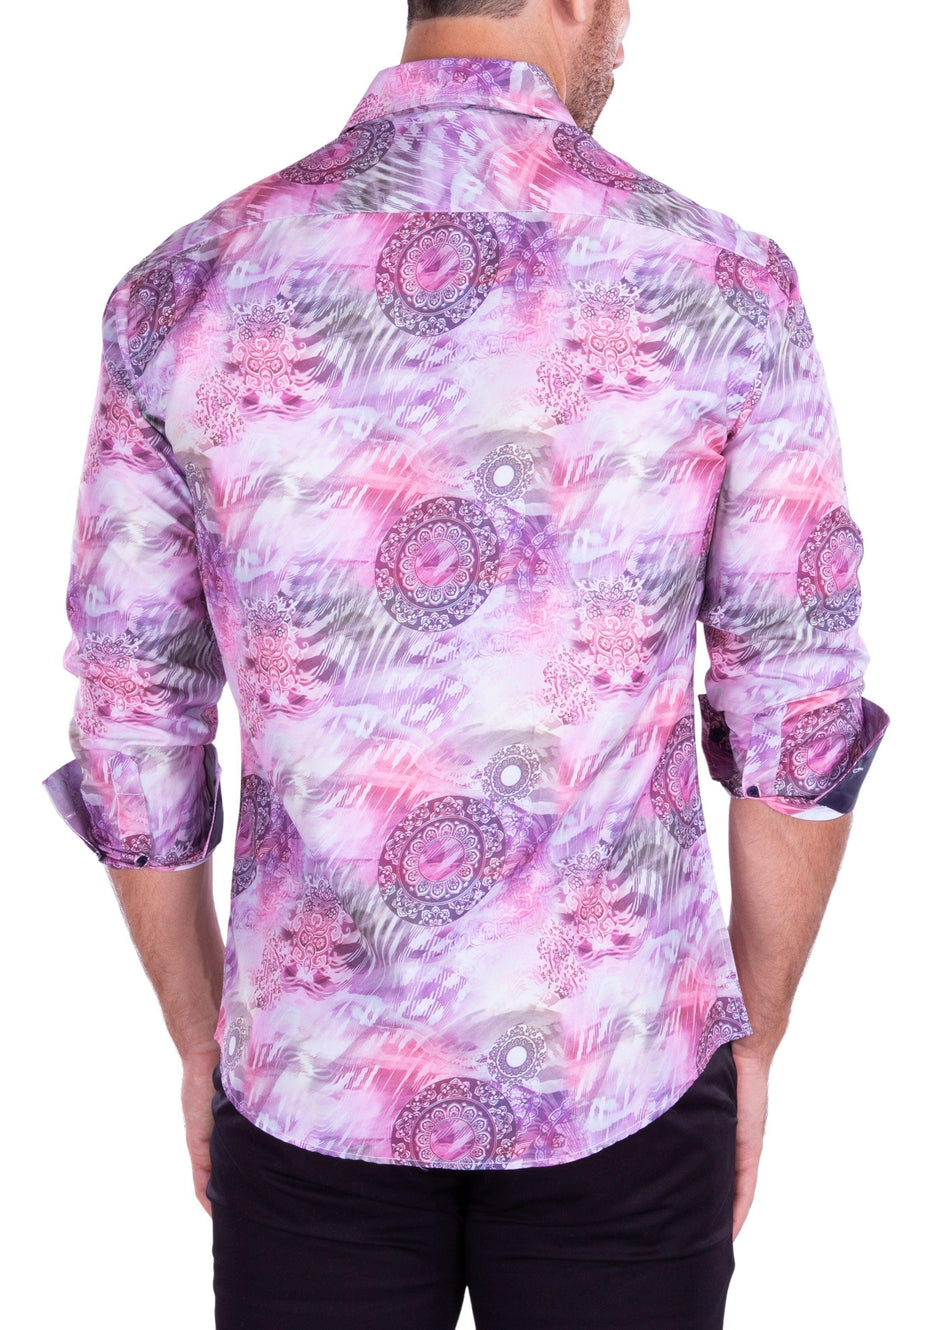 Psychedelic Mandala Print Long Sleeve Dress Shirt Pink